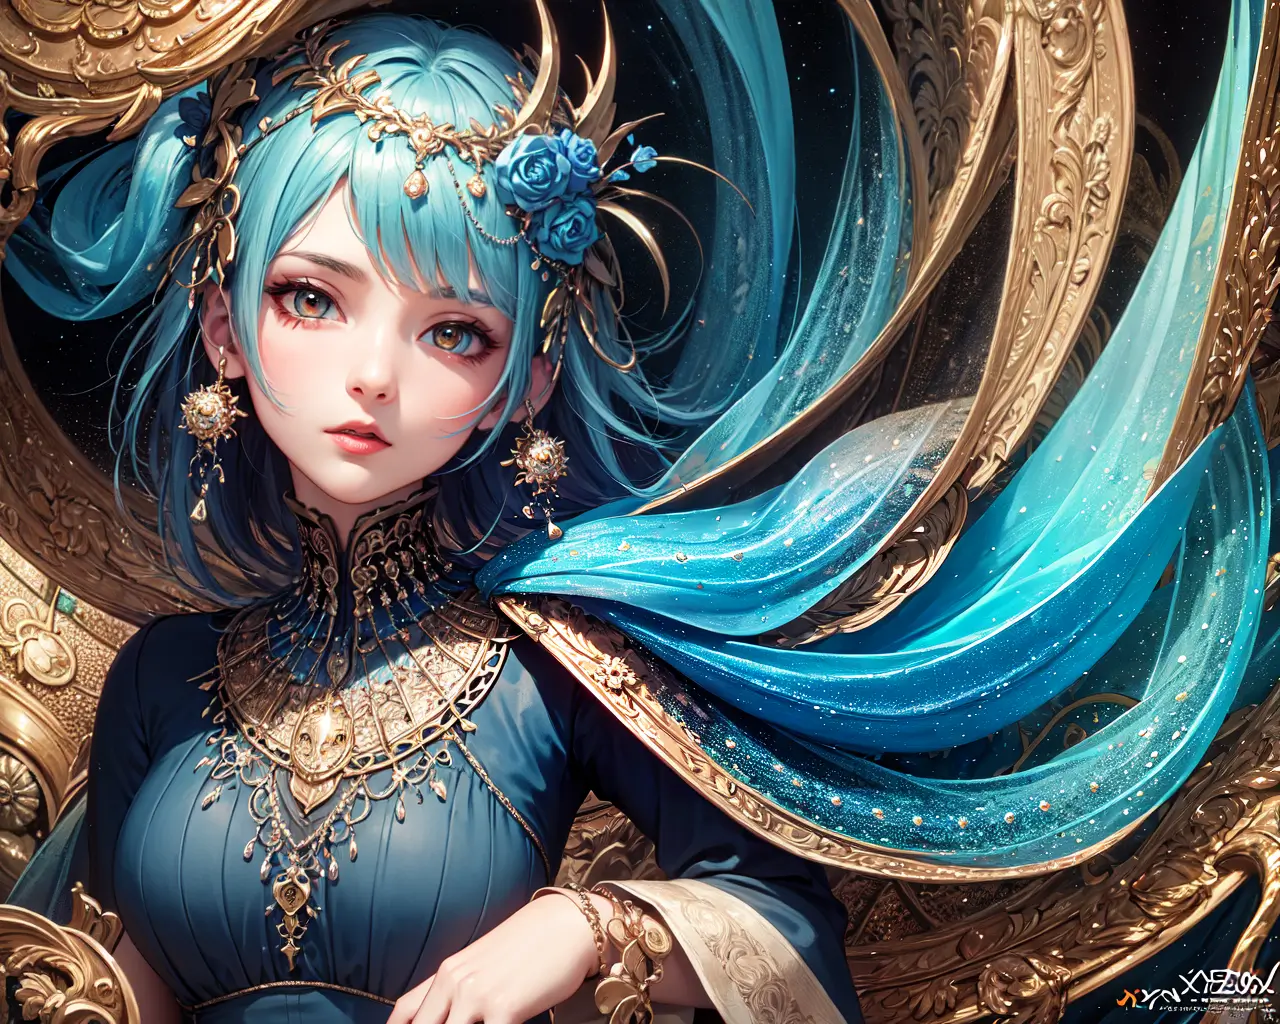 Fantasy girl in ornate blue dress